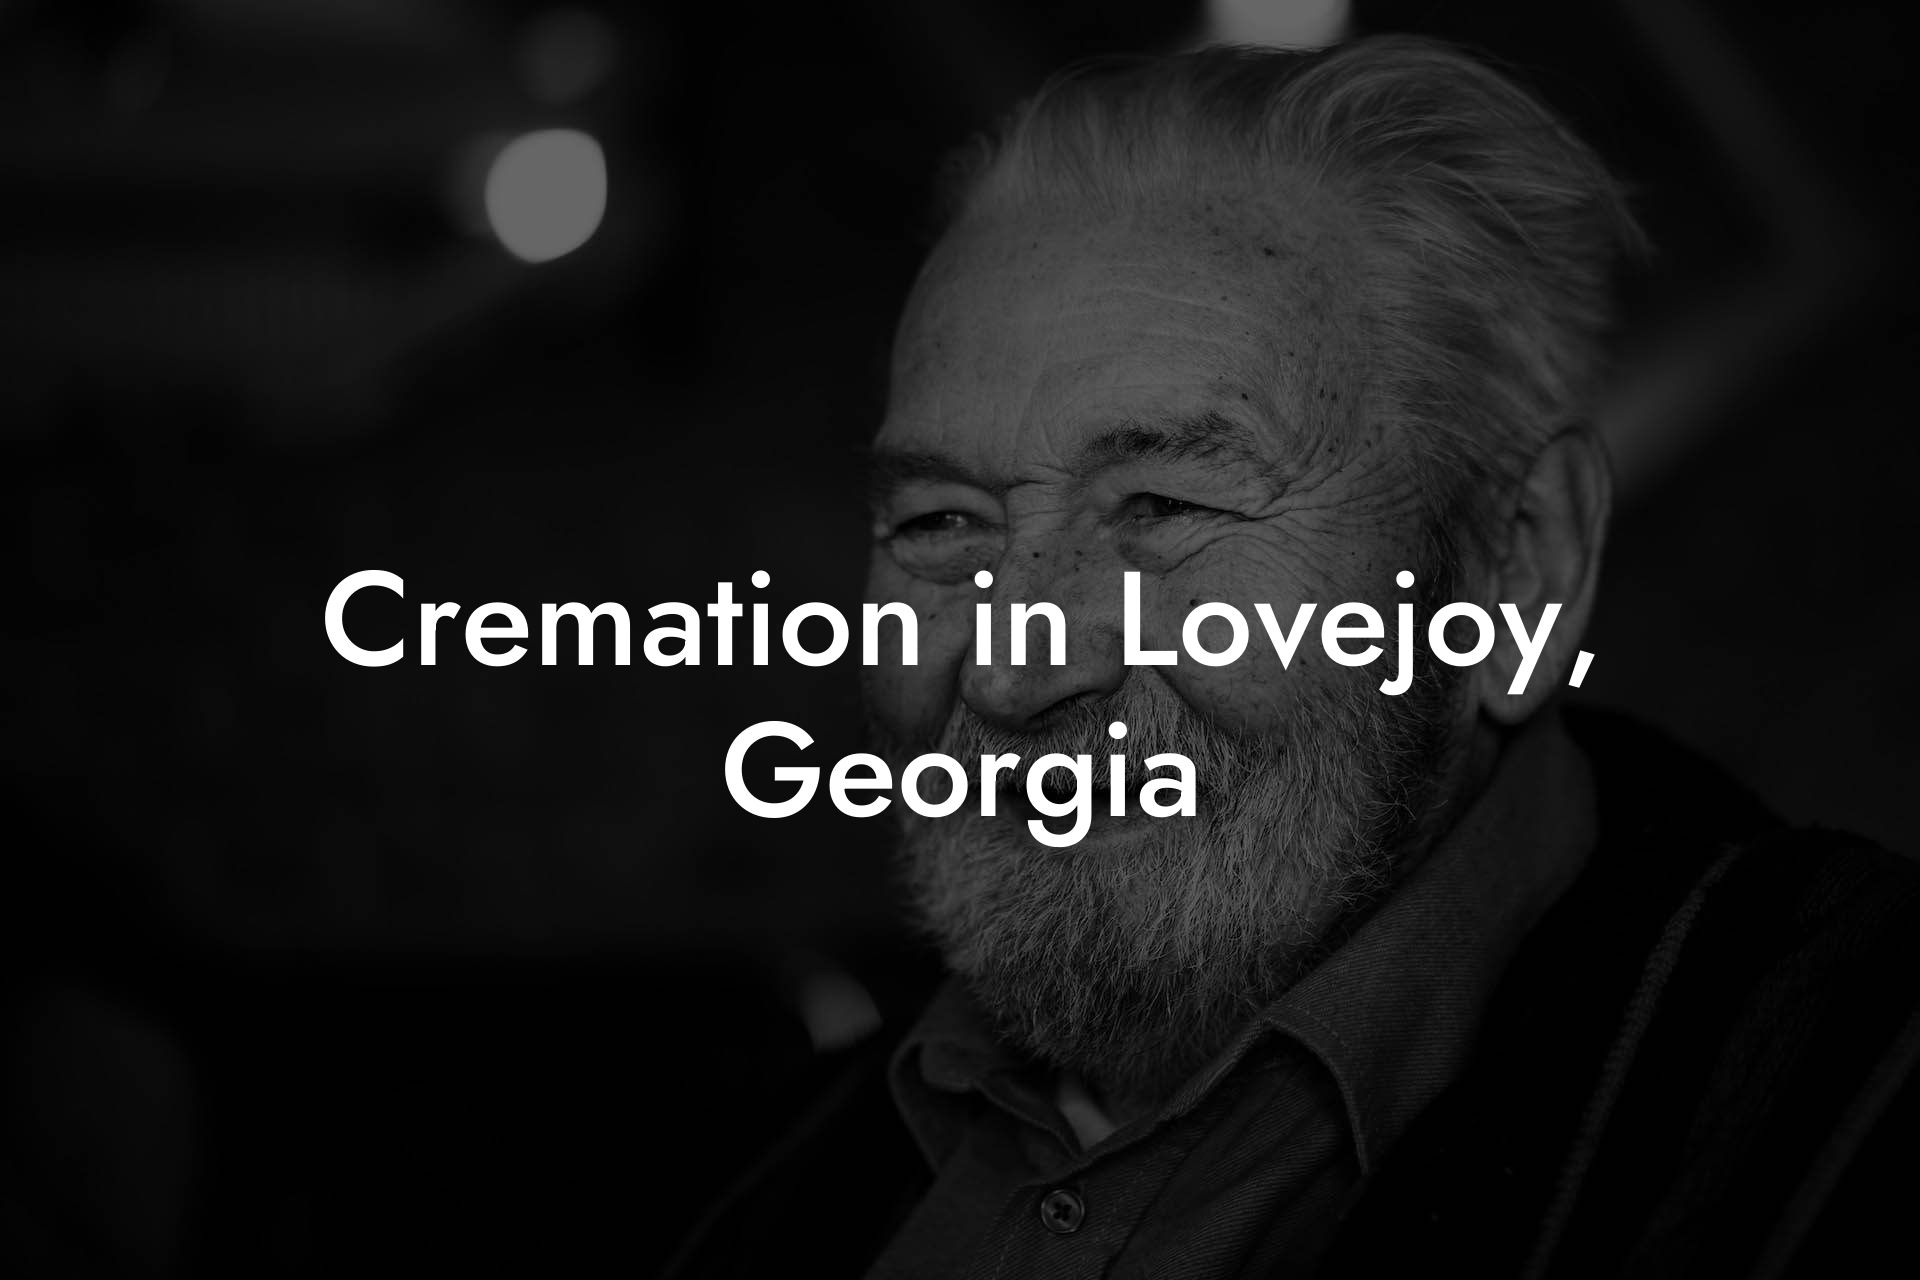 Cremation in Lovejoy, Georgia